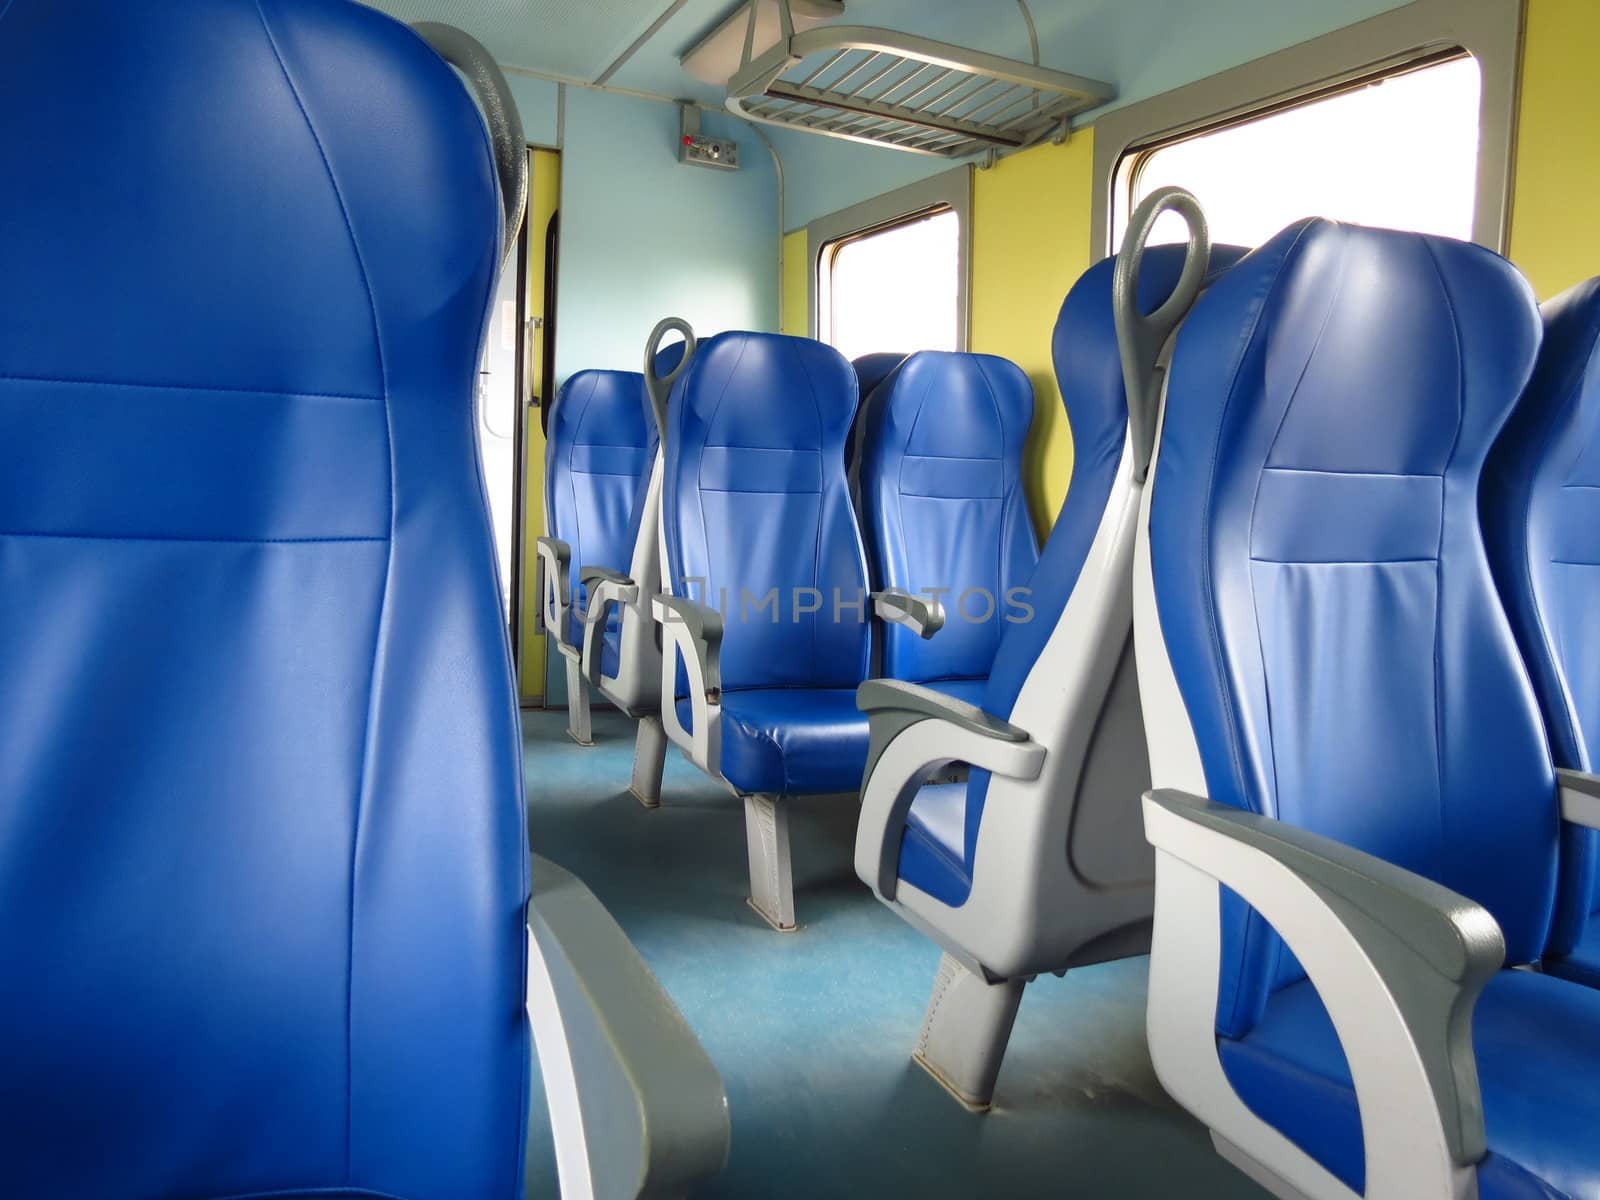 VERONA, CIRCA MARCH 2013 - train seats empty useful as travel concept, in Verona, March 2013